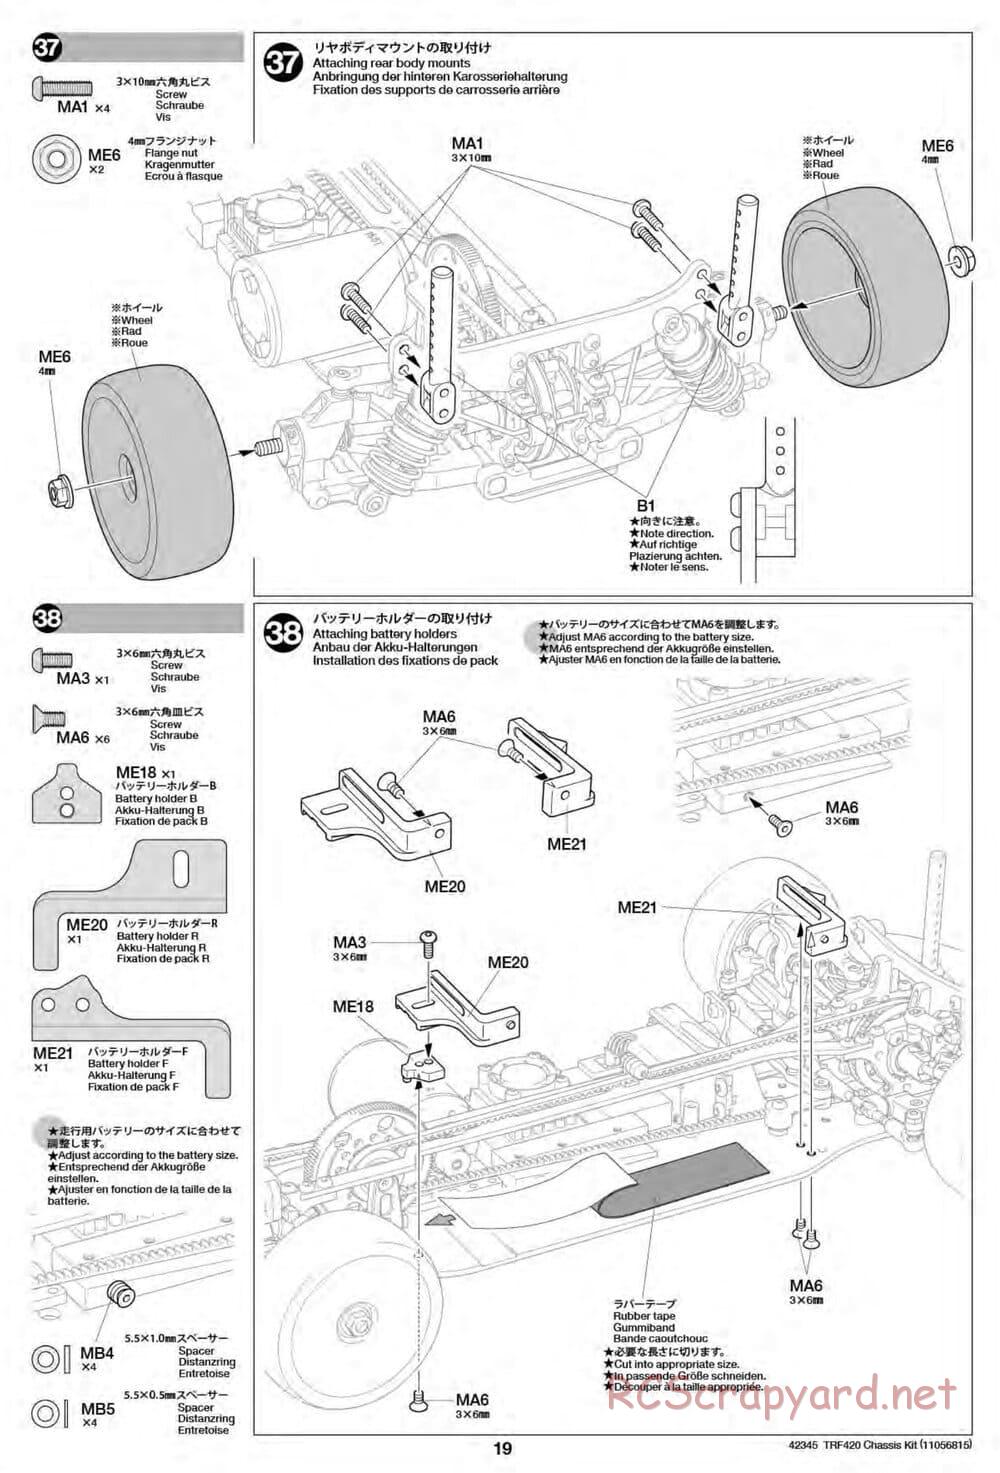 Tamiya - TRF420 Chassis - Manual - Page 19